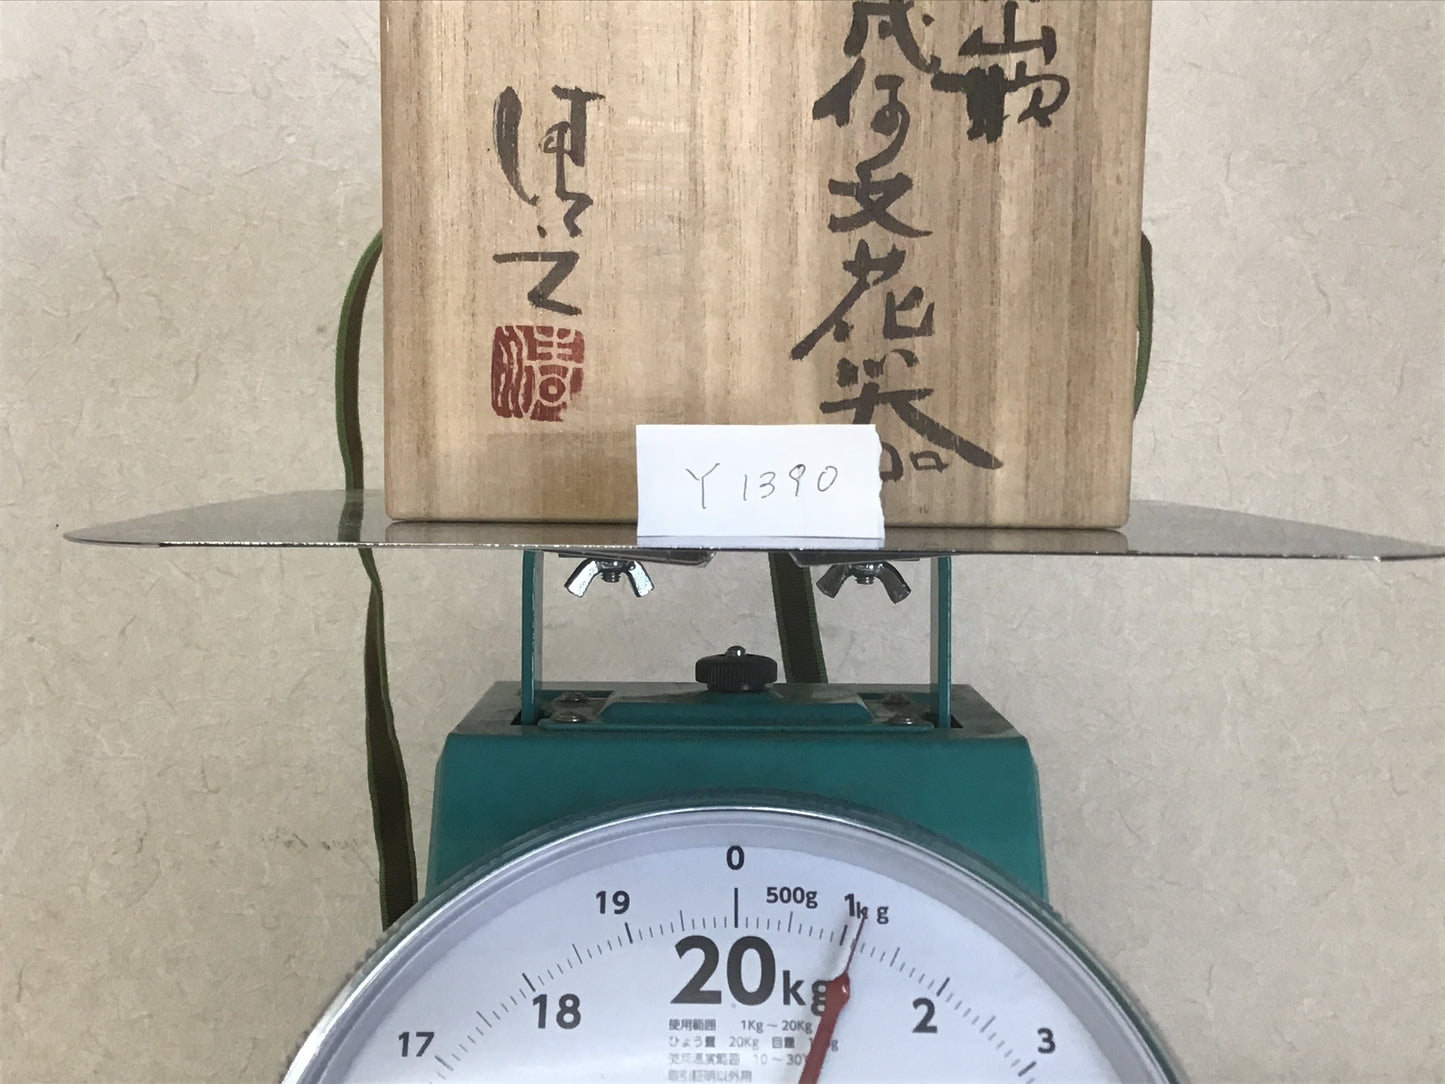 Y1390 FLOWER VASE Seto-ware signed box interior Japan antique ikebana kabin